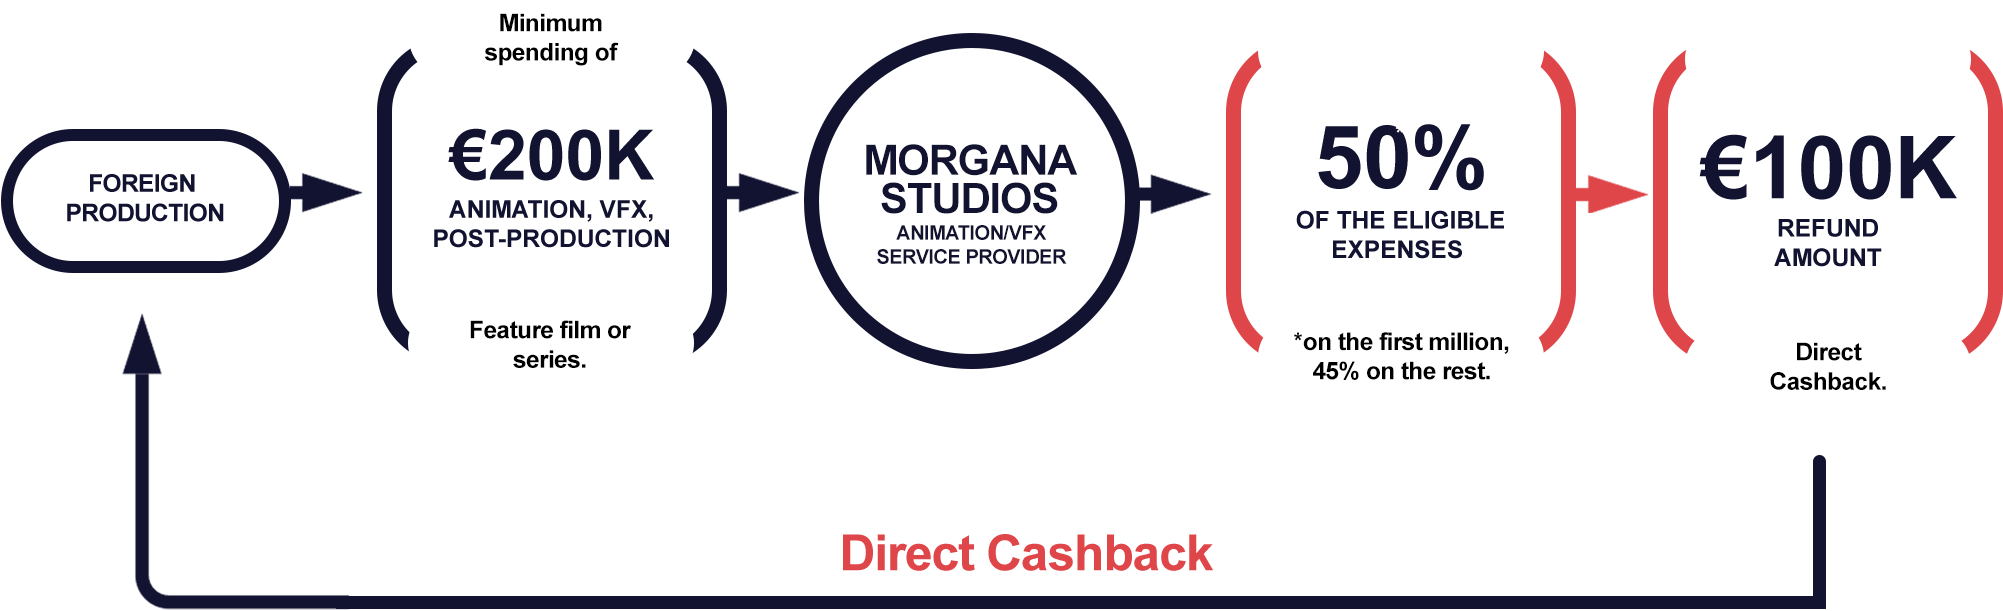 morgana-studios-madrid-canary-islands-cashback-incentive-case-example